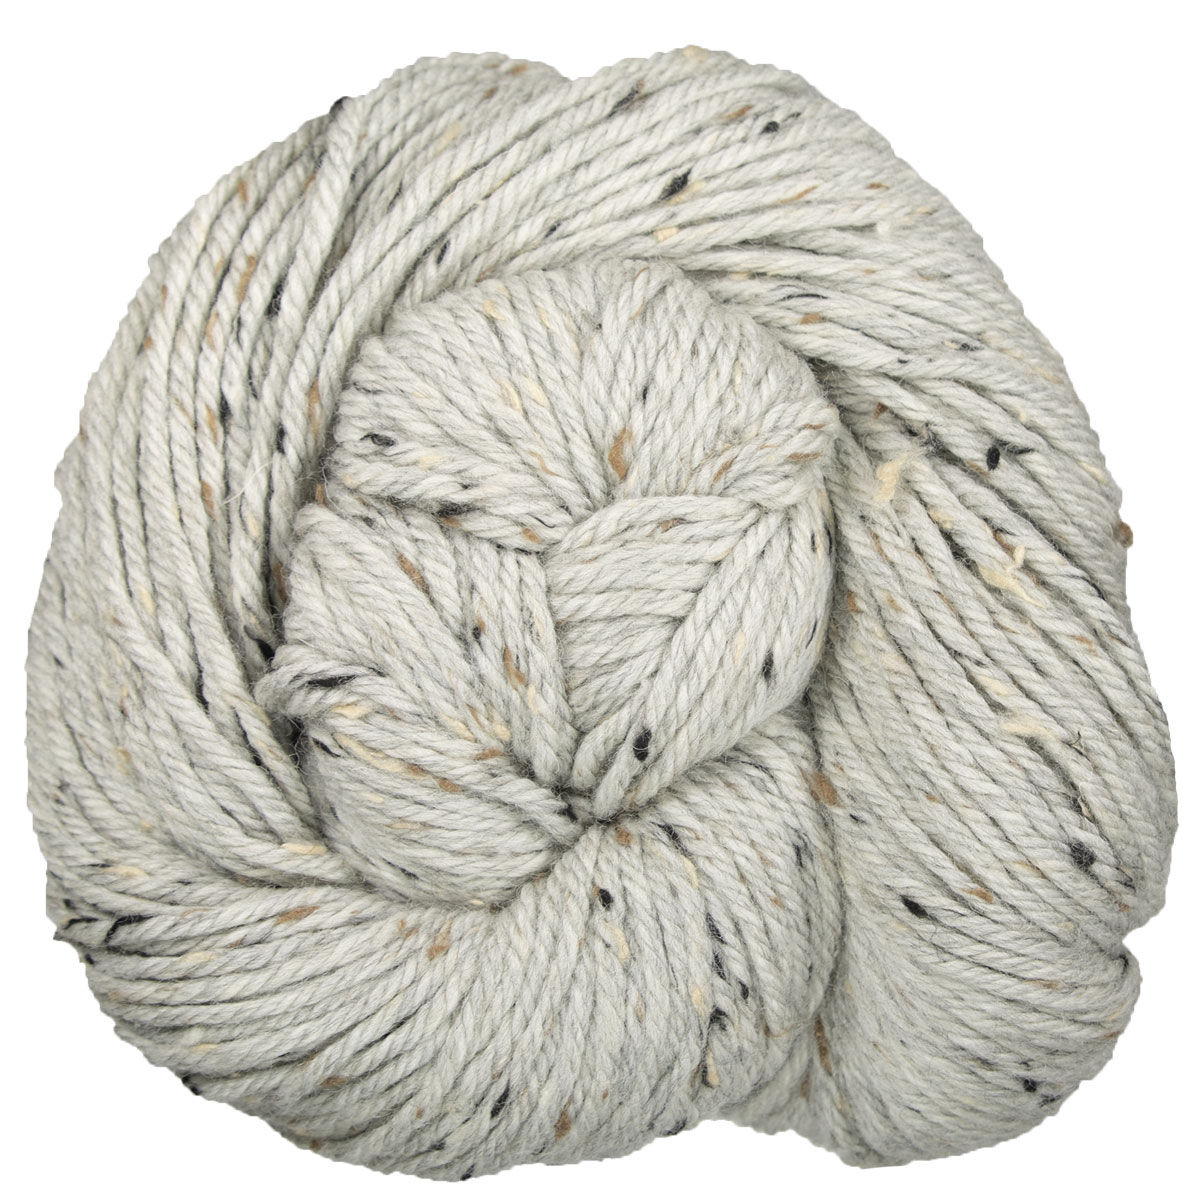 Blue Sky Fibers Woolstok Tweed (Aran) Yarn - 3302 Silver Birch at